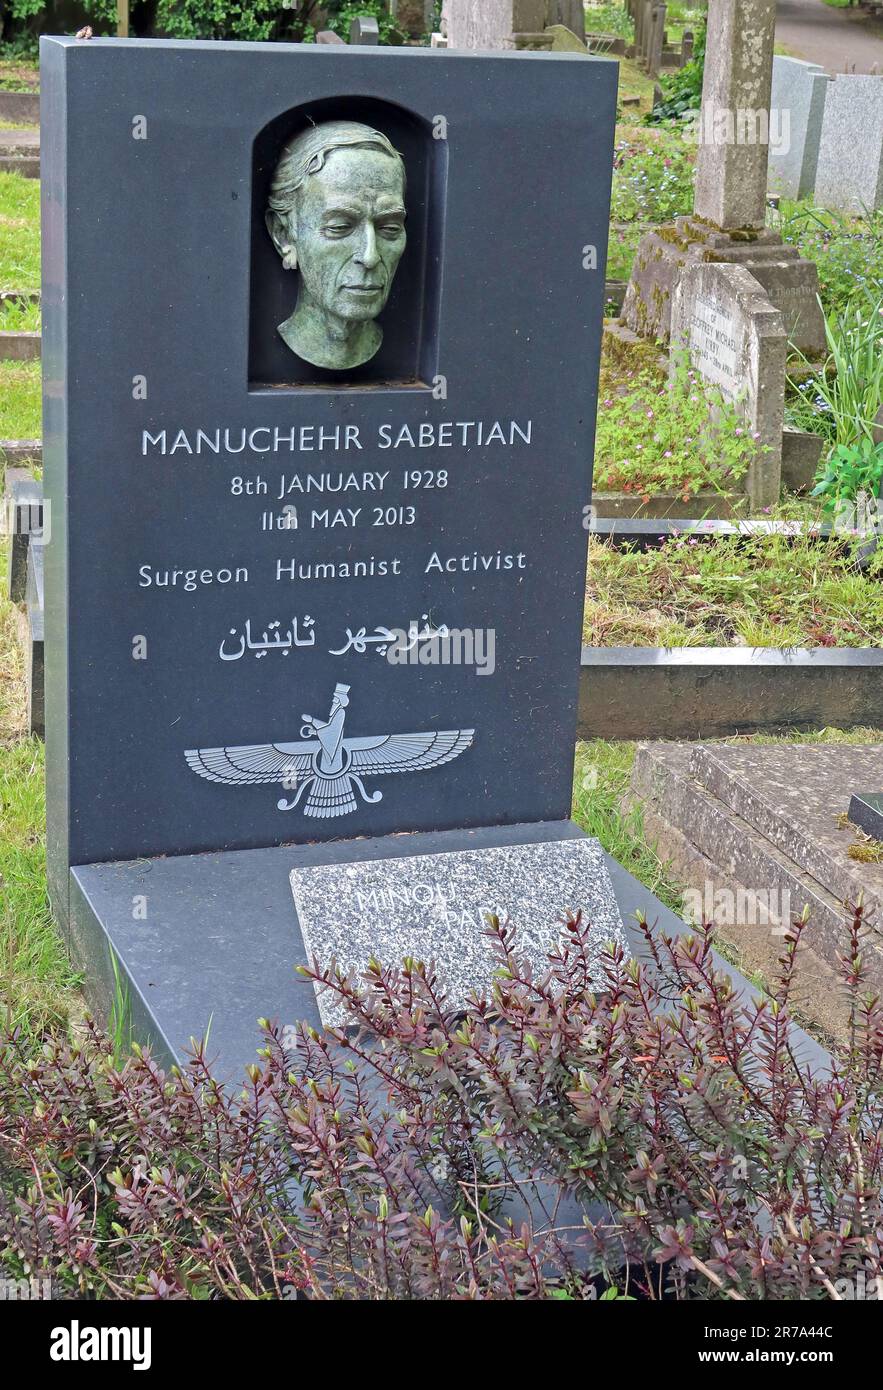 Grave of Manuchehr Sabetian, Iranian consulting surgeon, buried in Highgate Cemetery, London, Swain's Lane, N6 6PJ Stock Photo